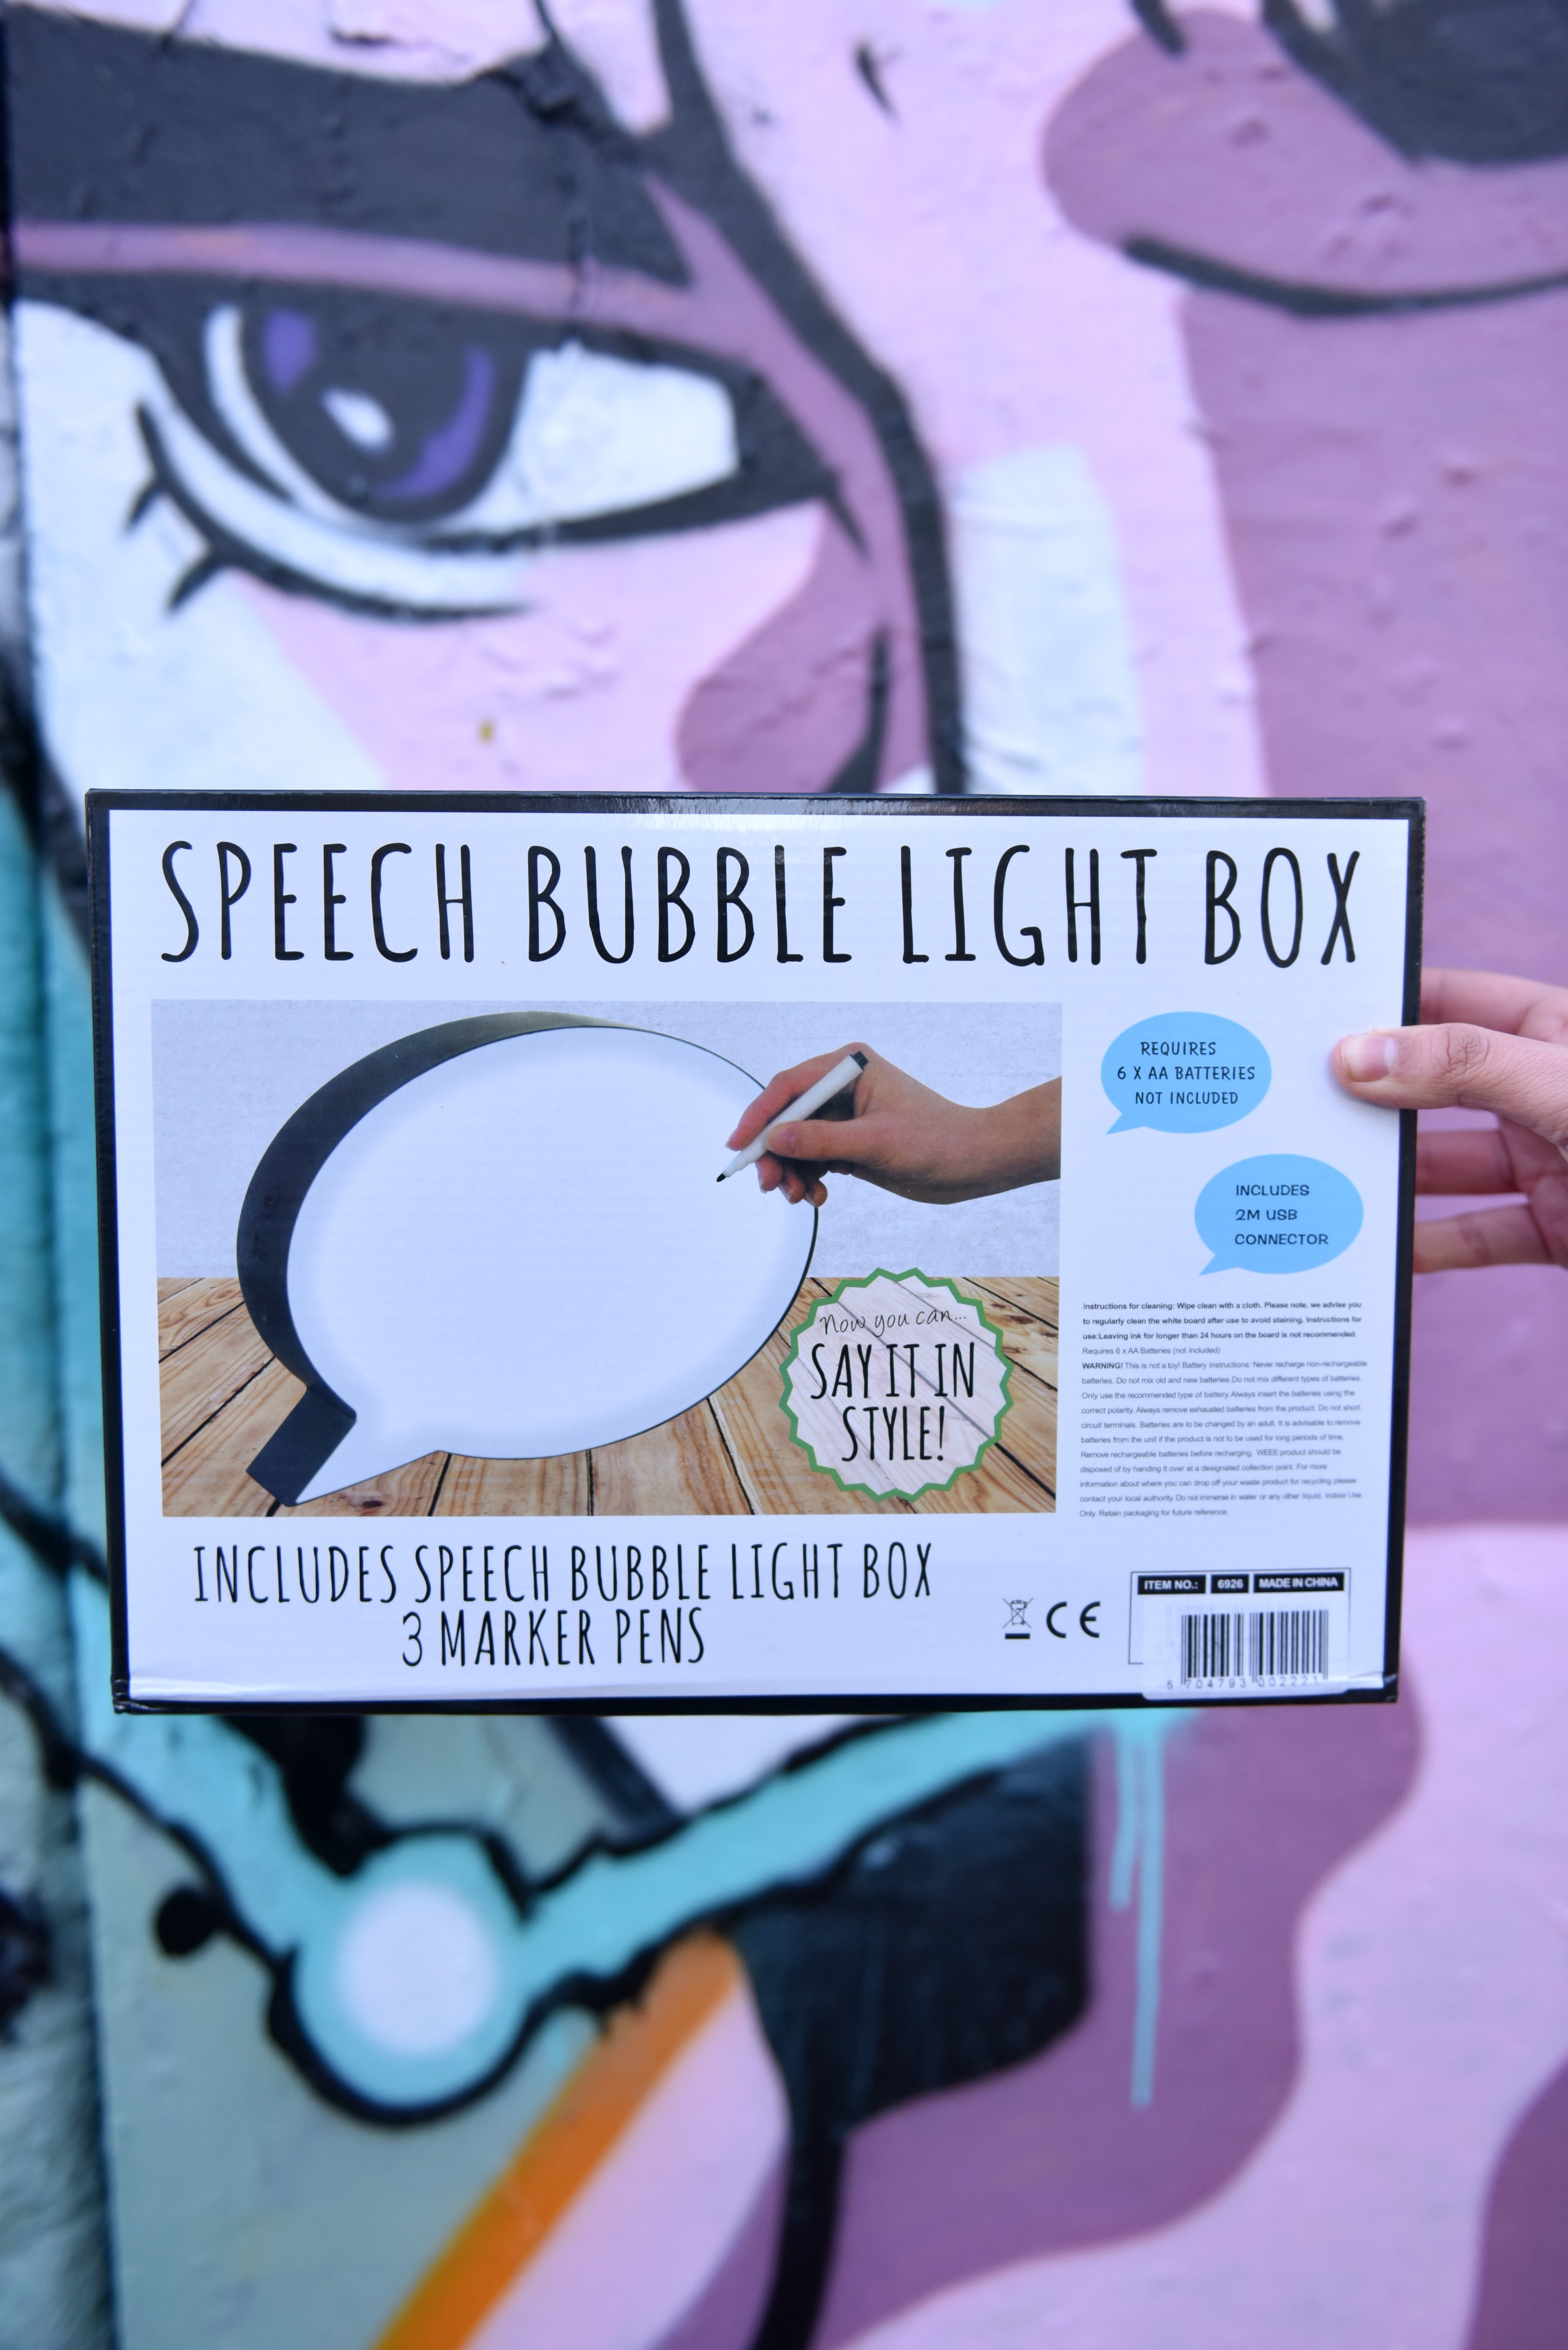 <img src="ana.jpg" alt="ana speech bubble lightbox"/> 